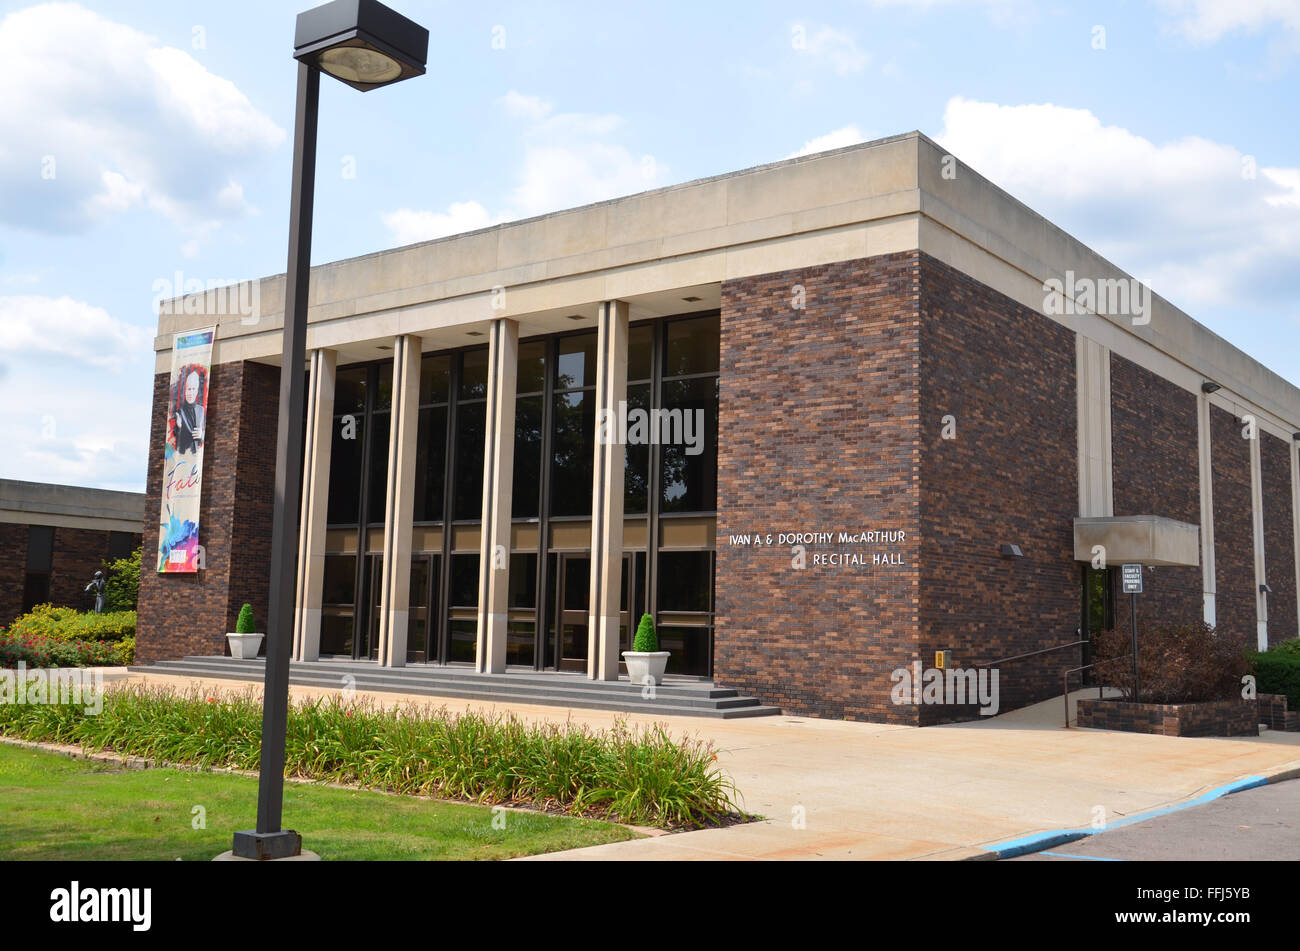 FLINT, MI - AUGUST 22: The McArthur Recital Hall in Flint, MI, shown here on August 22, 2015. Stock Photo